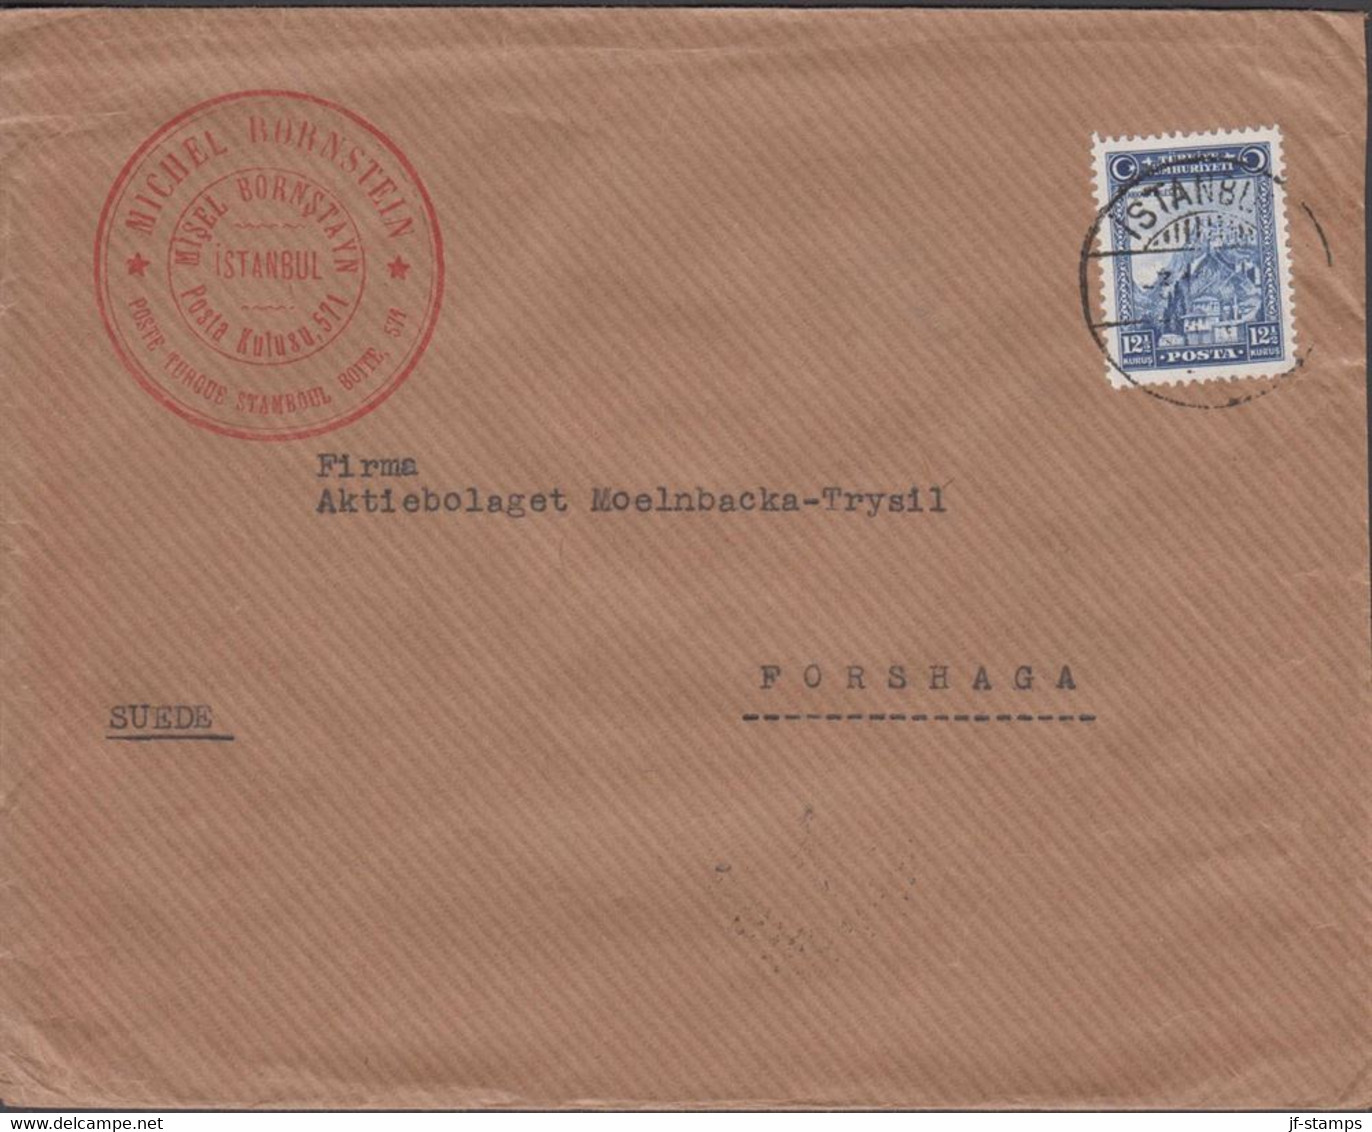 1930. TÜRKIYE Cover To Forshaga, Sweden With 12½ KURUS Ankara Fort Issue TÜRKİYE CUMHURİYETİ ... (Michel 889) - JF436492 - Briefe U. Dokumente